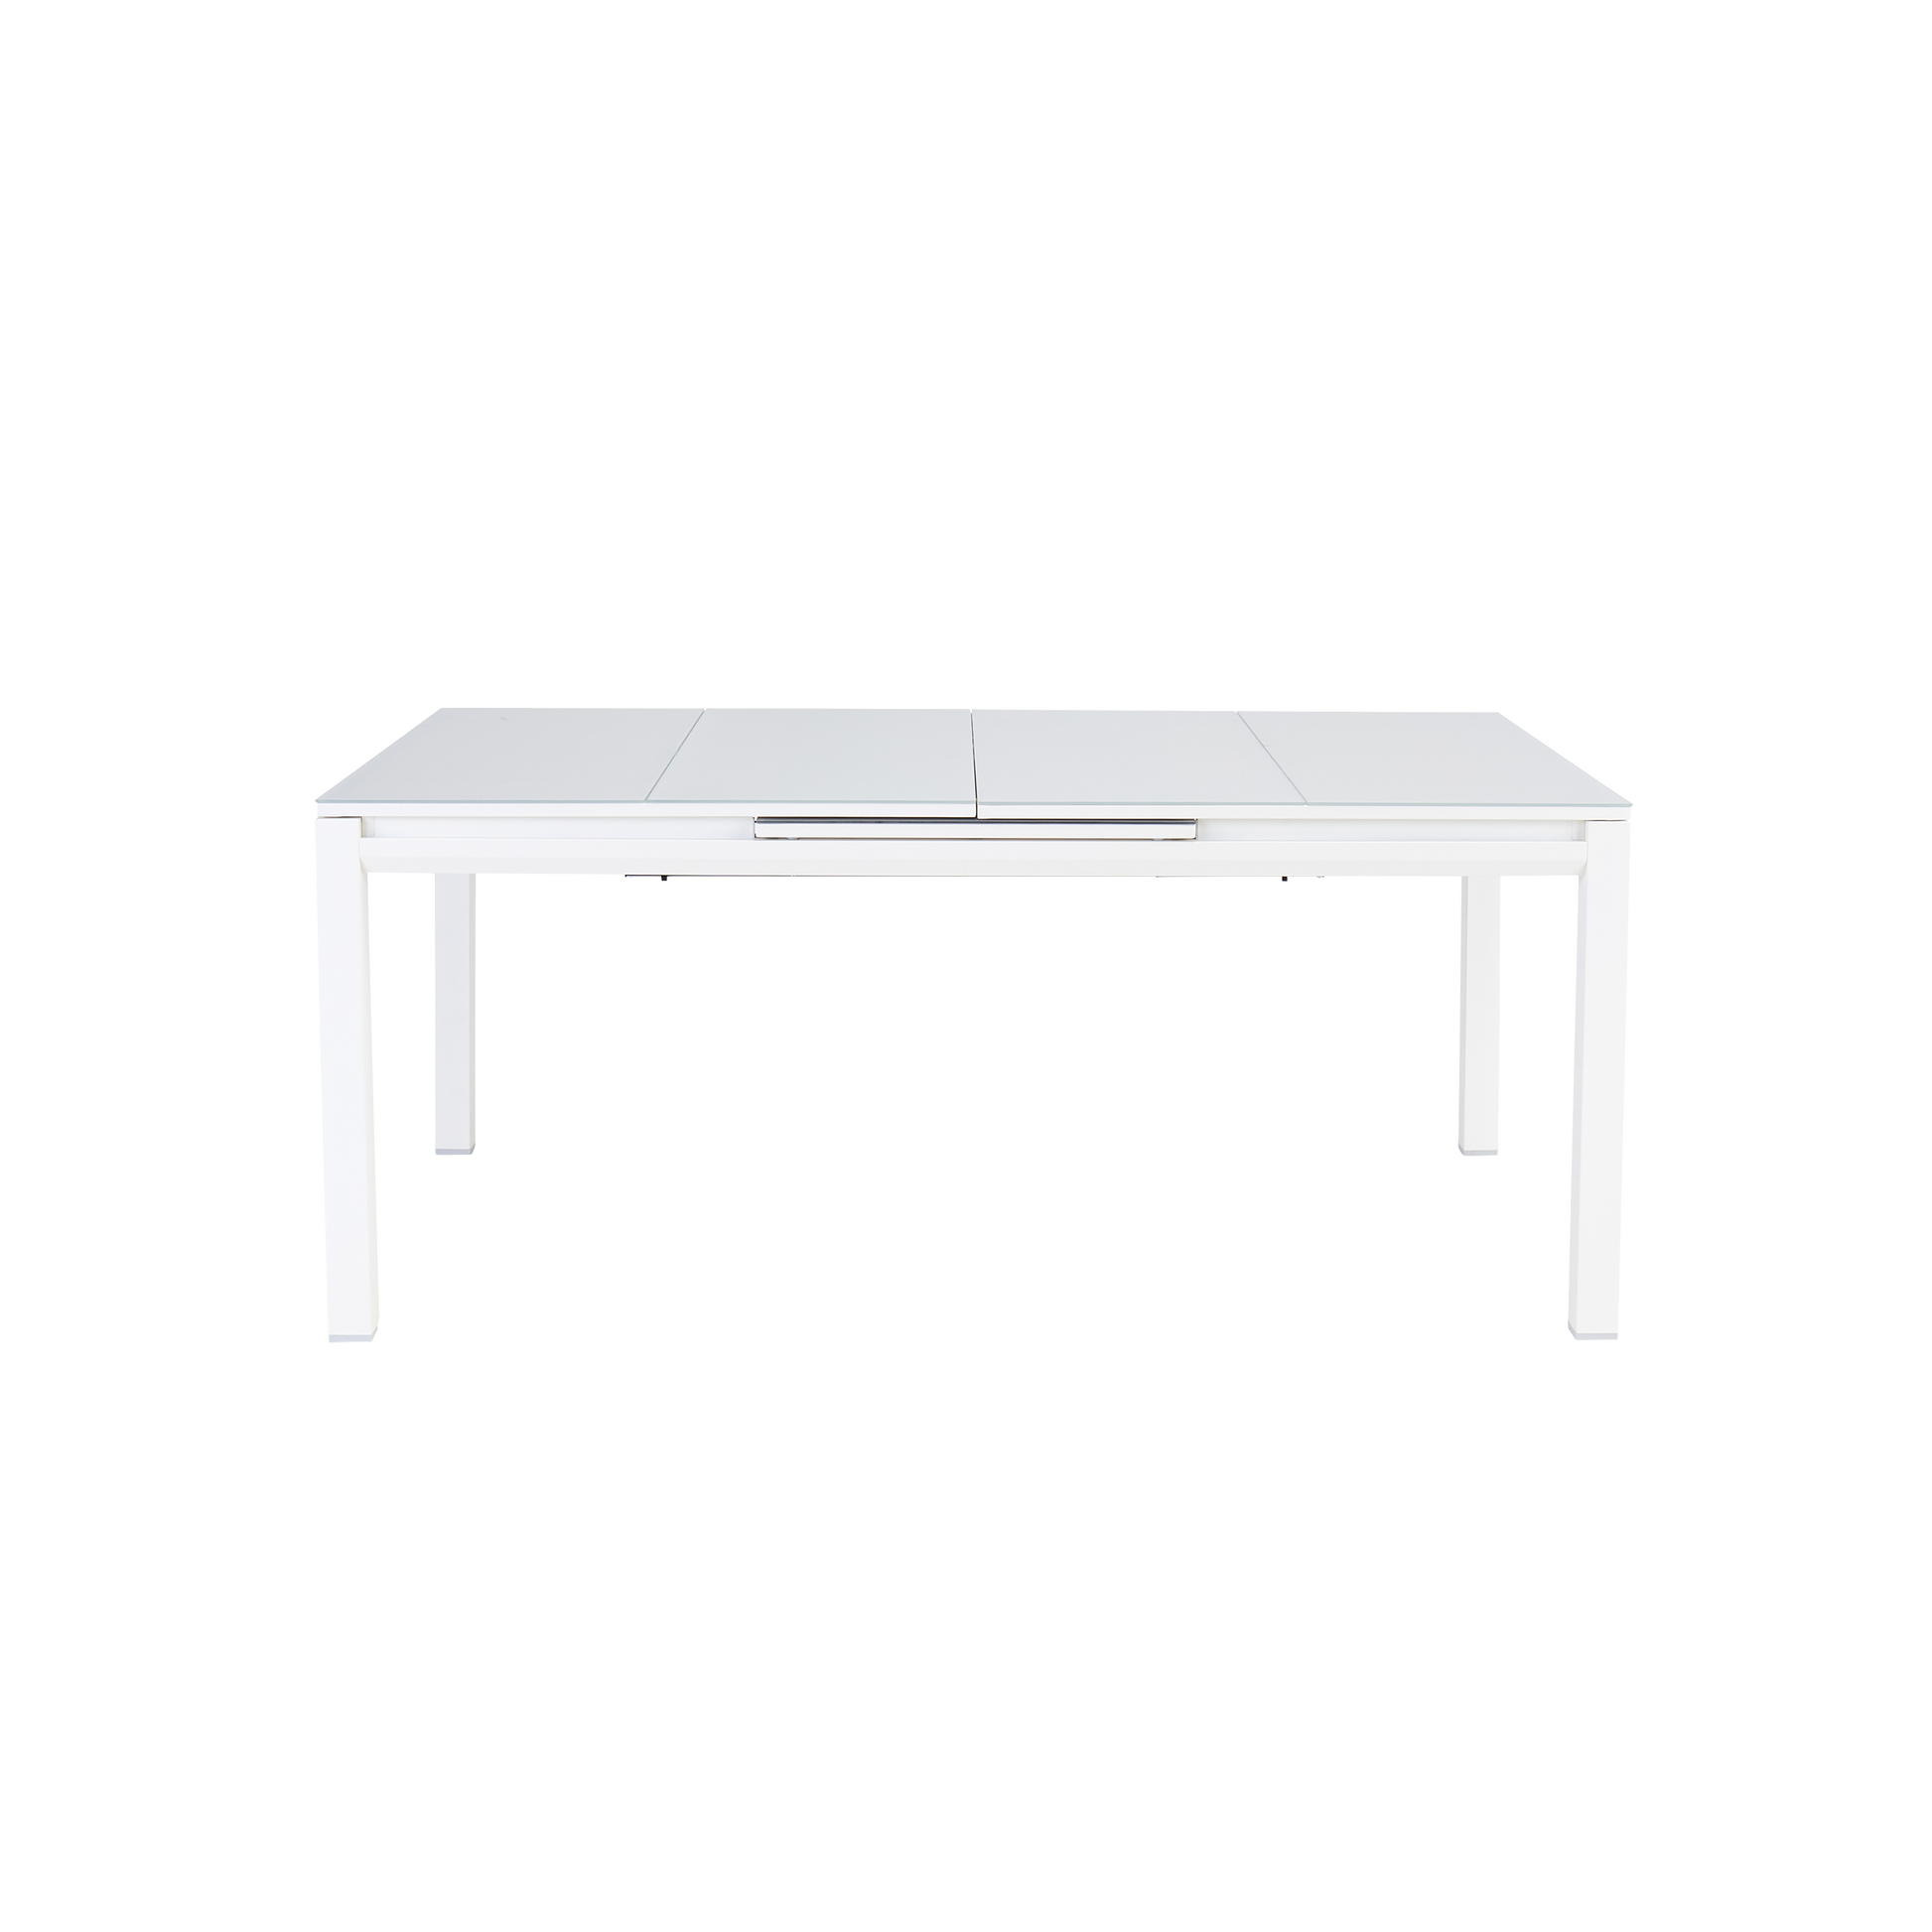 TABLE ODYSSEA II EASY NATERIAL 180/240X100 WHITE ALUMINIUM GLASS